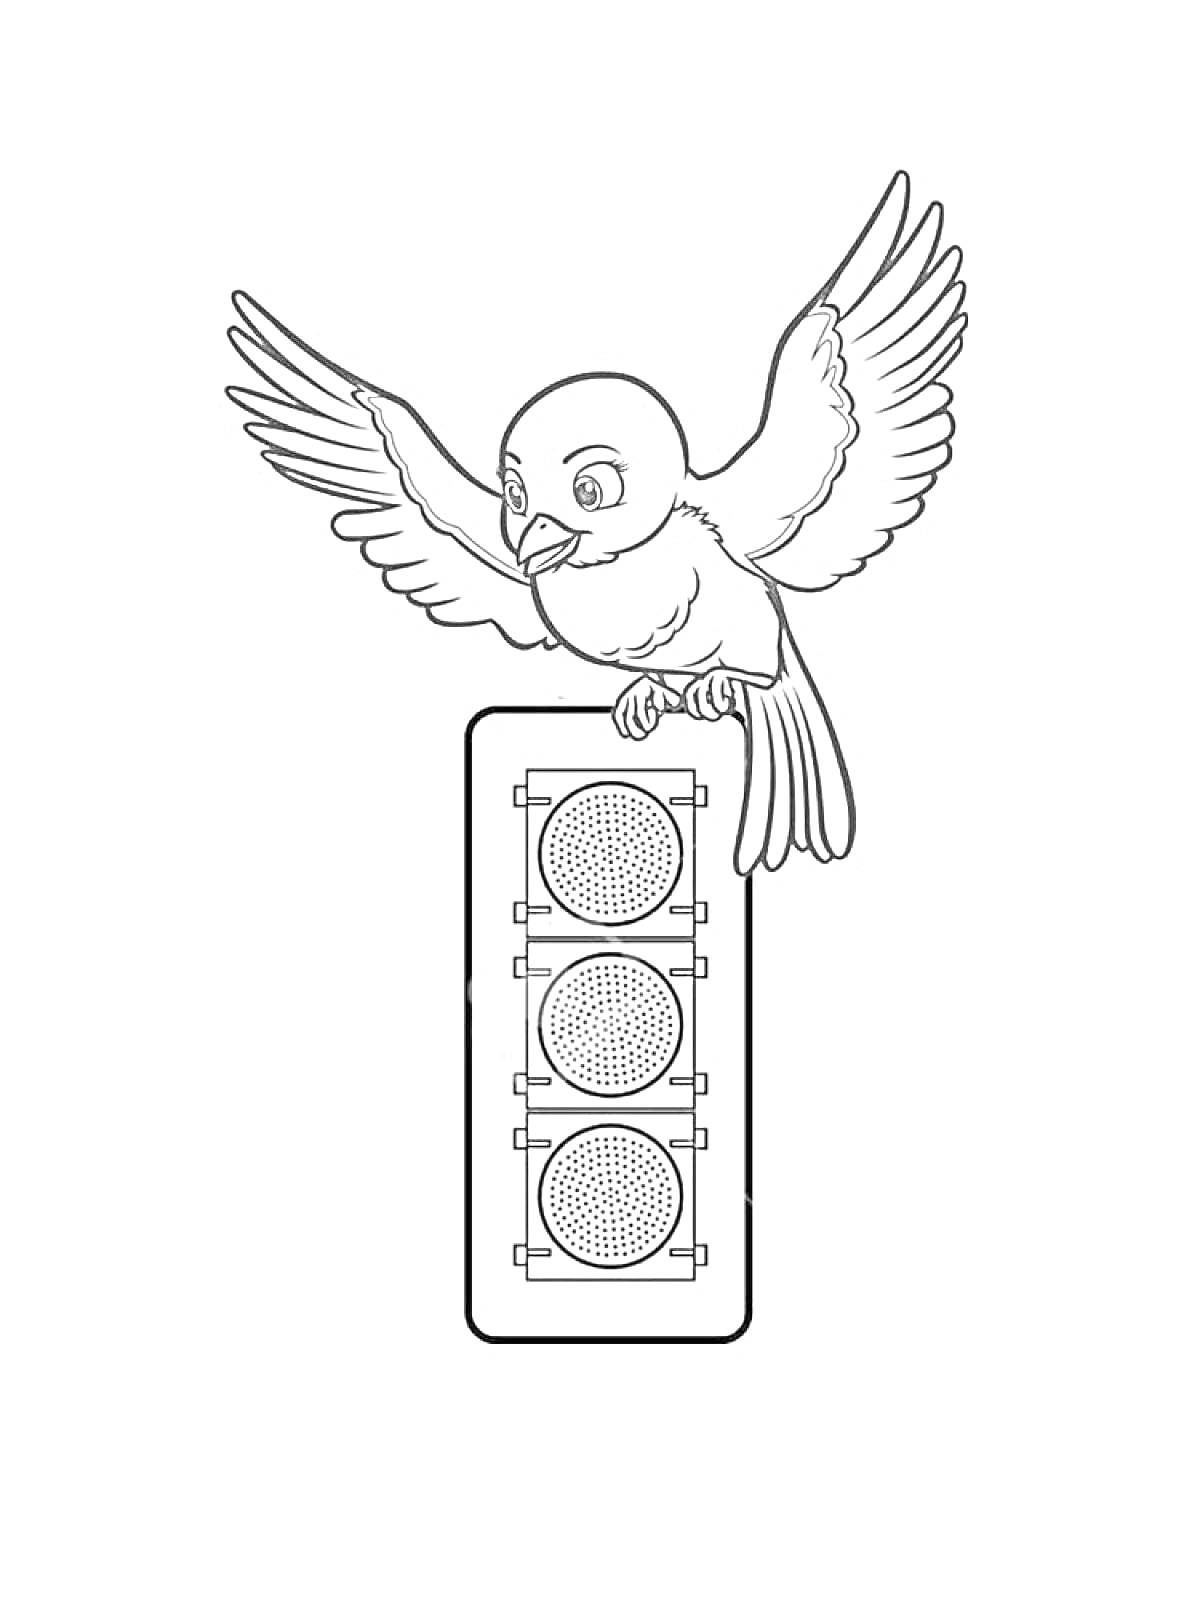 Раскраска Светофор с птицей, сидящей сверху